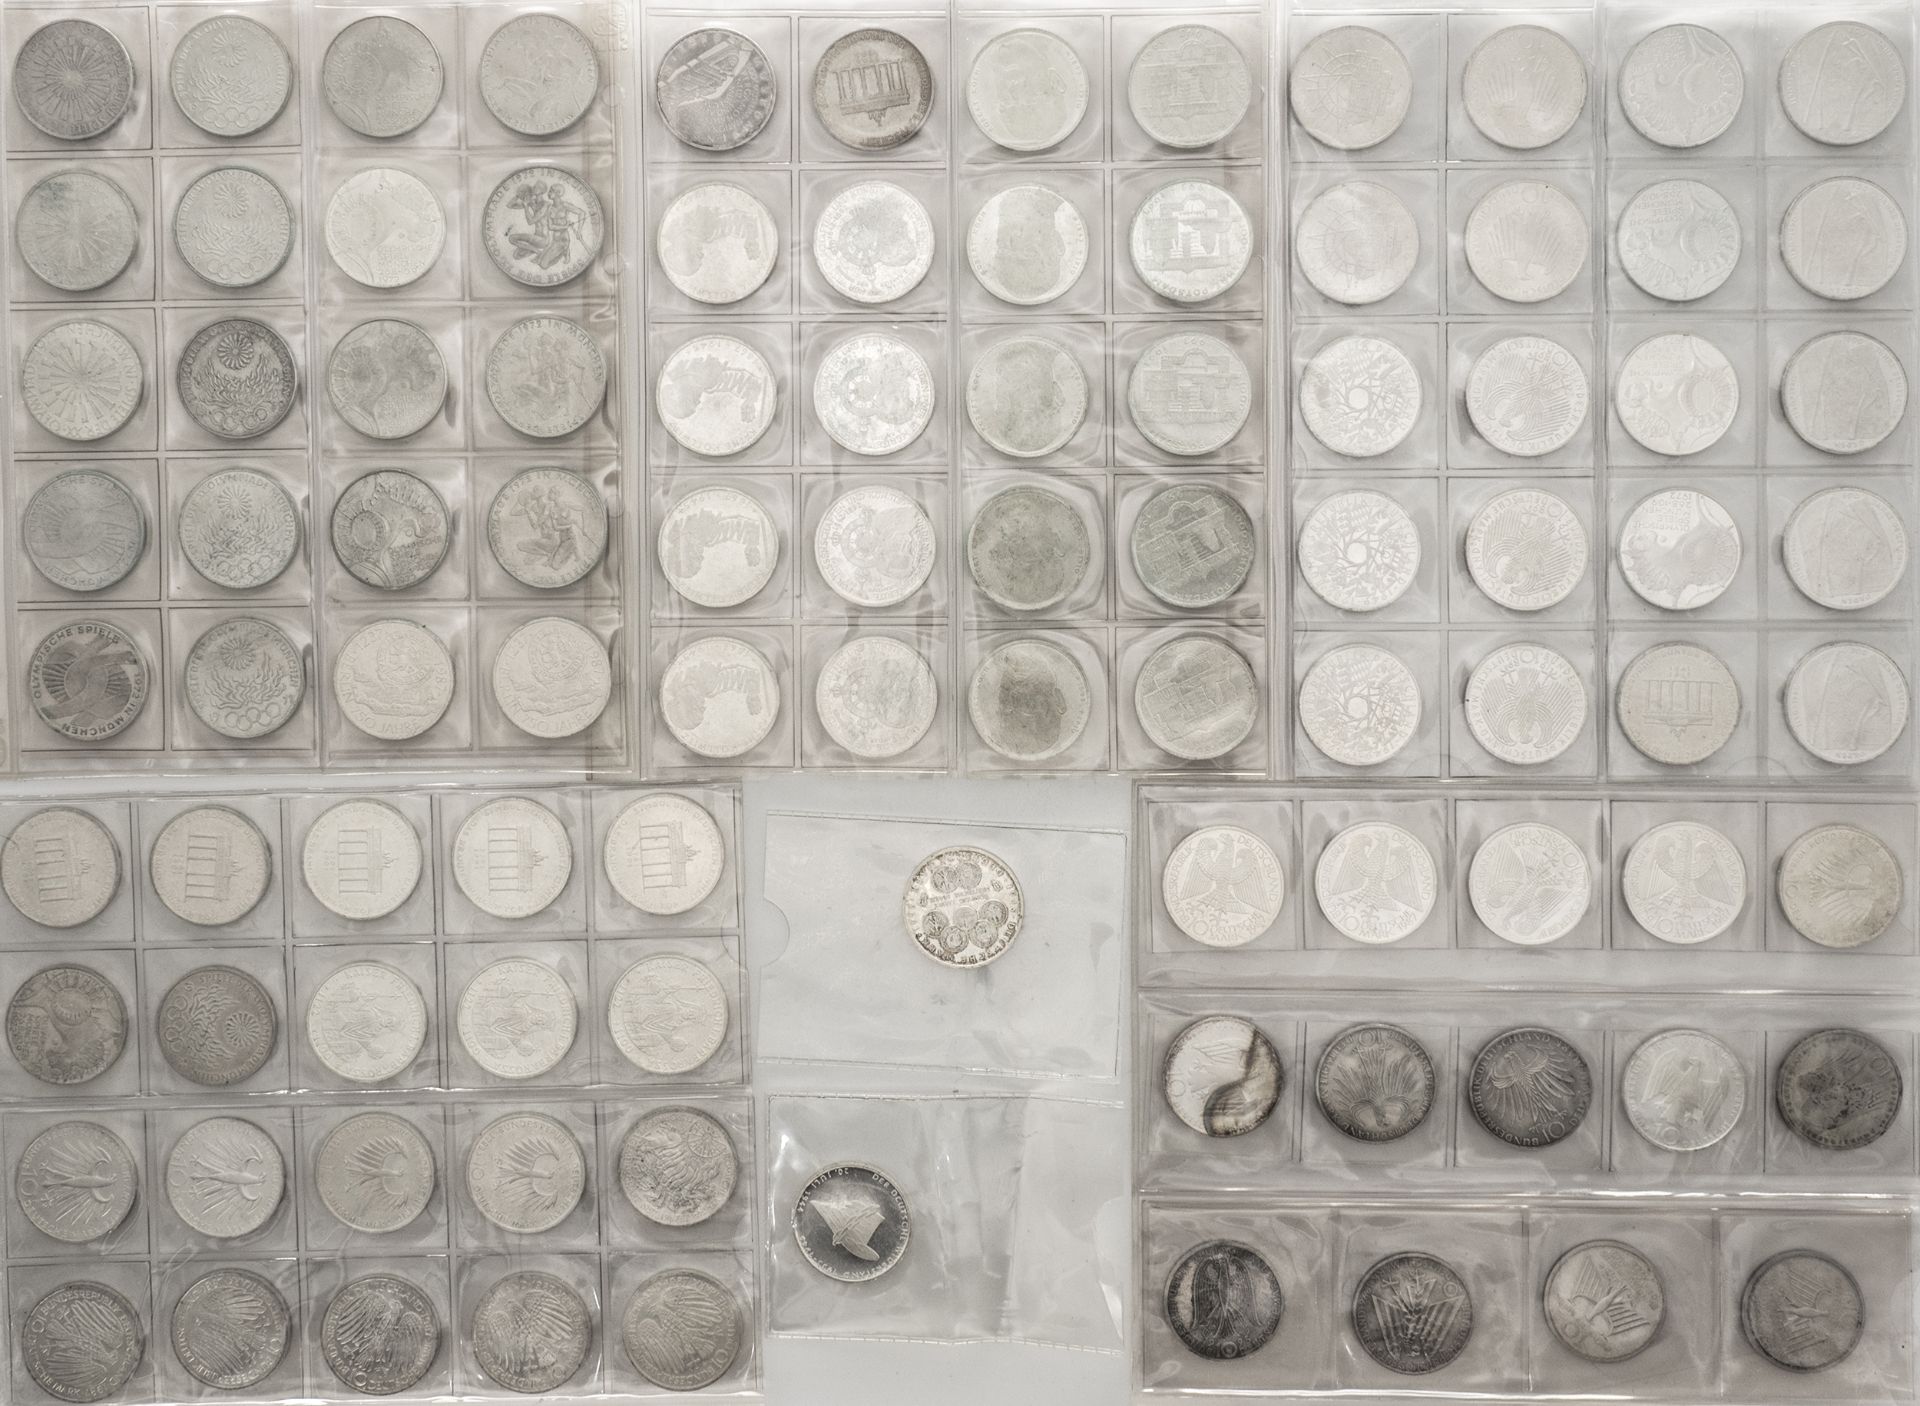 Sammlung 10.- - DM - Silbermünzen. Insgesamt 96 Stück.